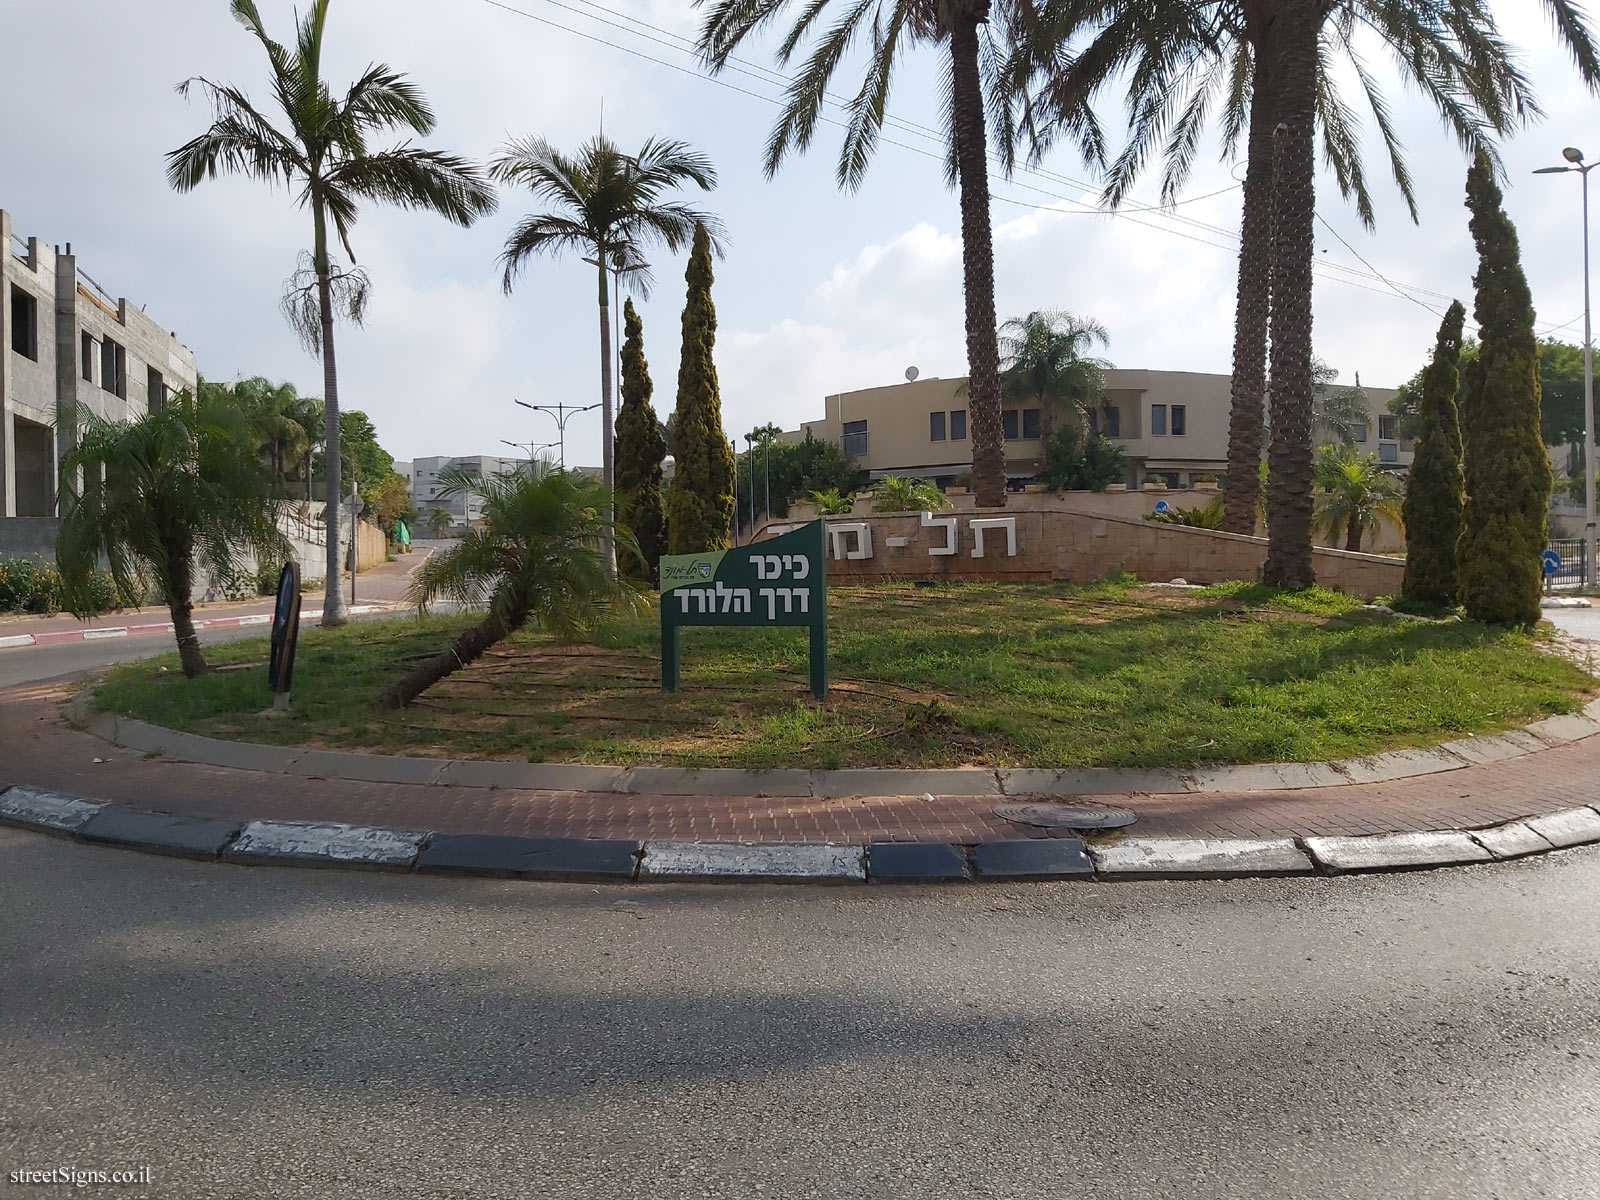 Tel Mond - Derech HaLord Square - Avnei Hen St 27, Tel Mond, Israel